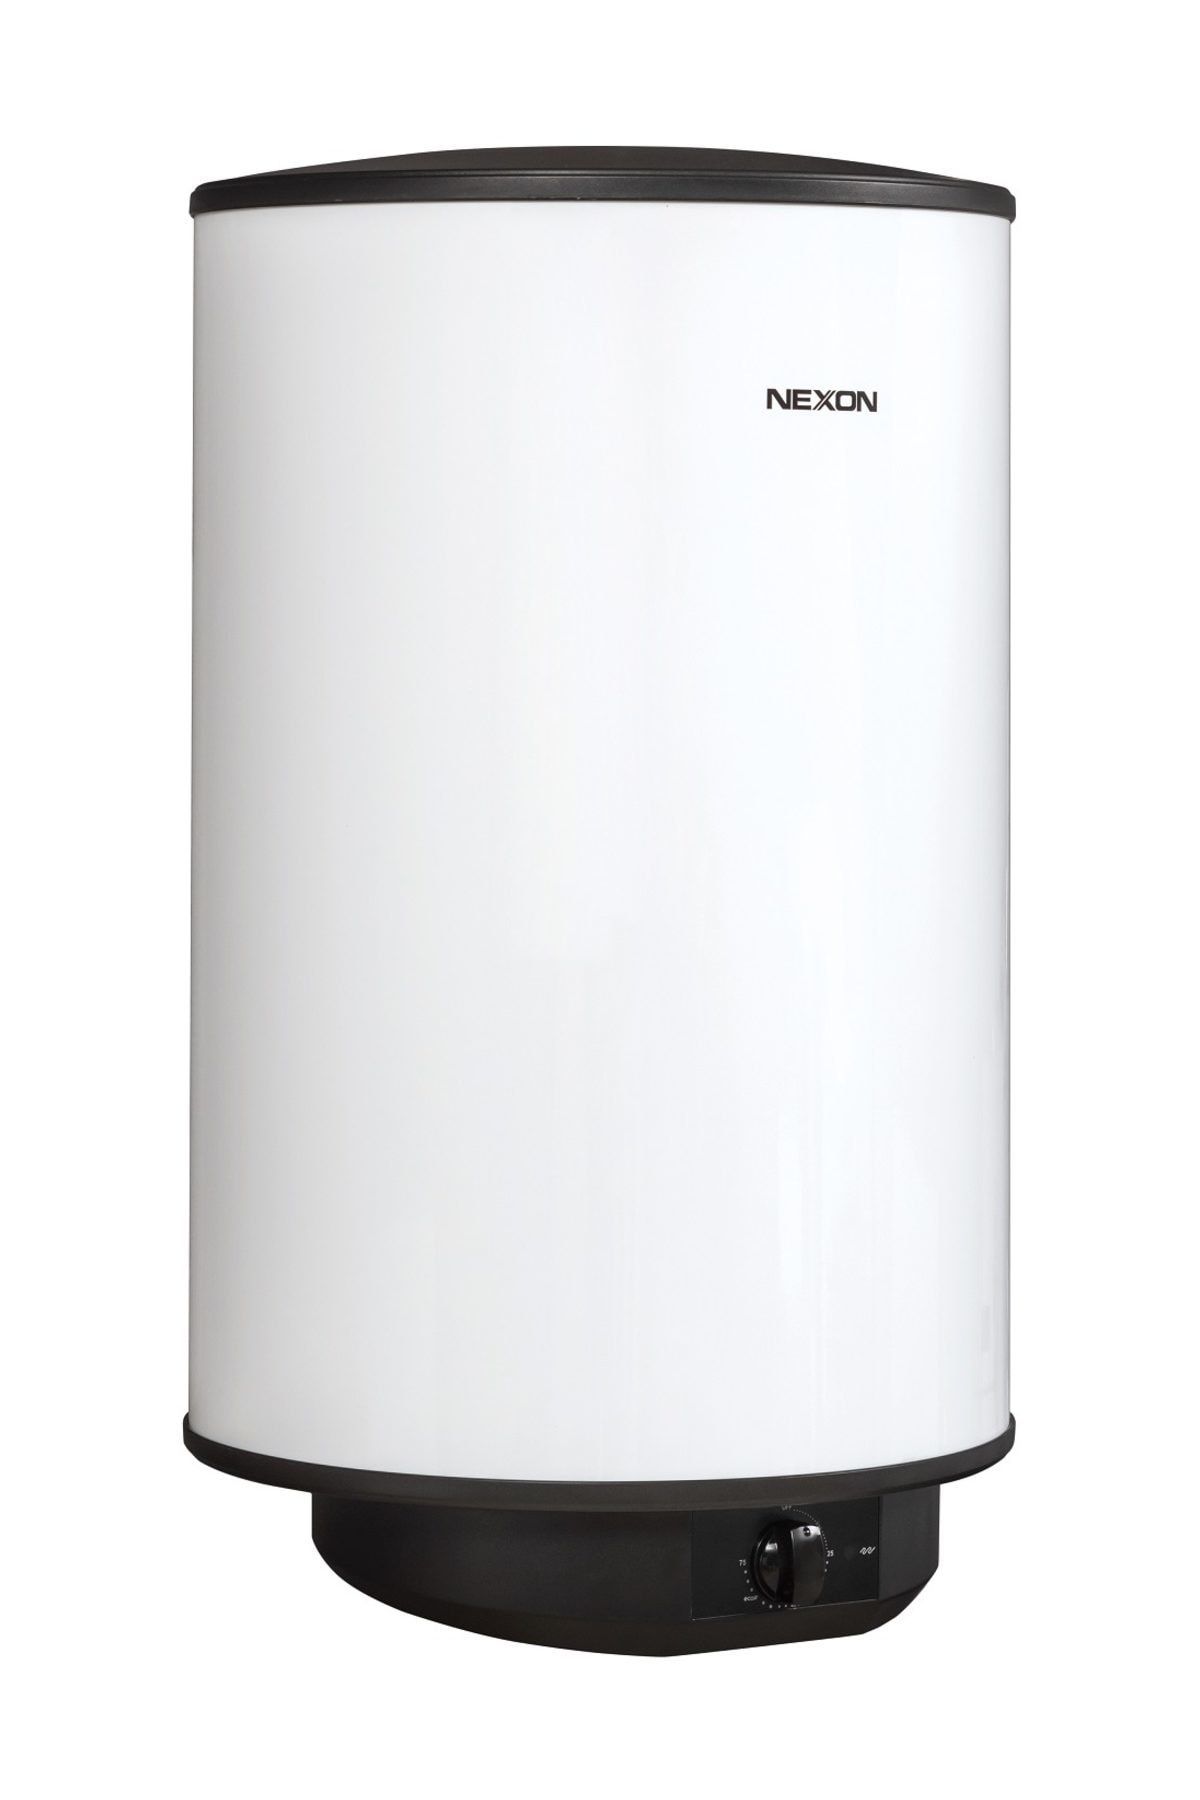 Nexon NEXON TRS 50 M Mekanik Termosifon